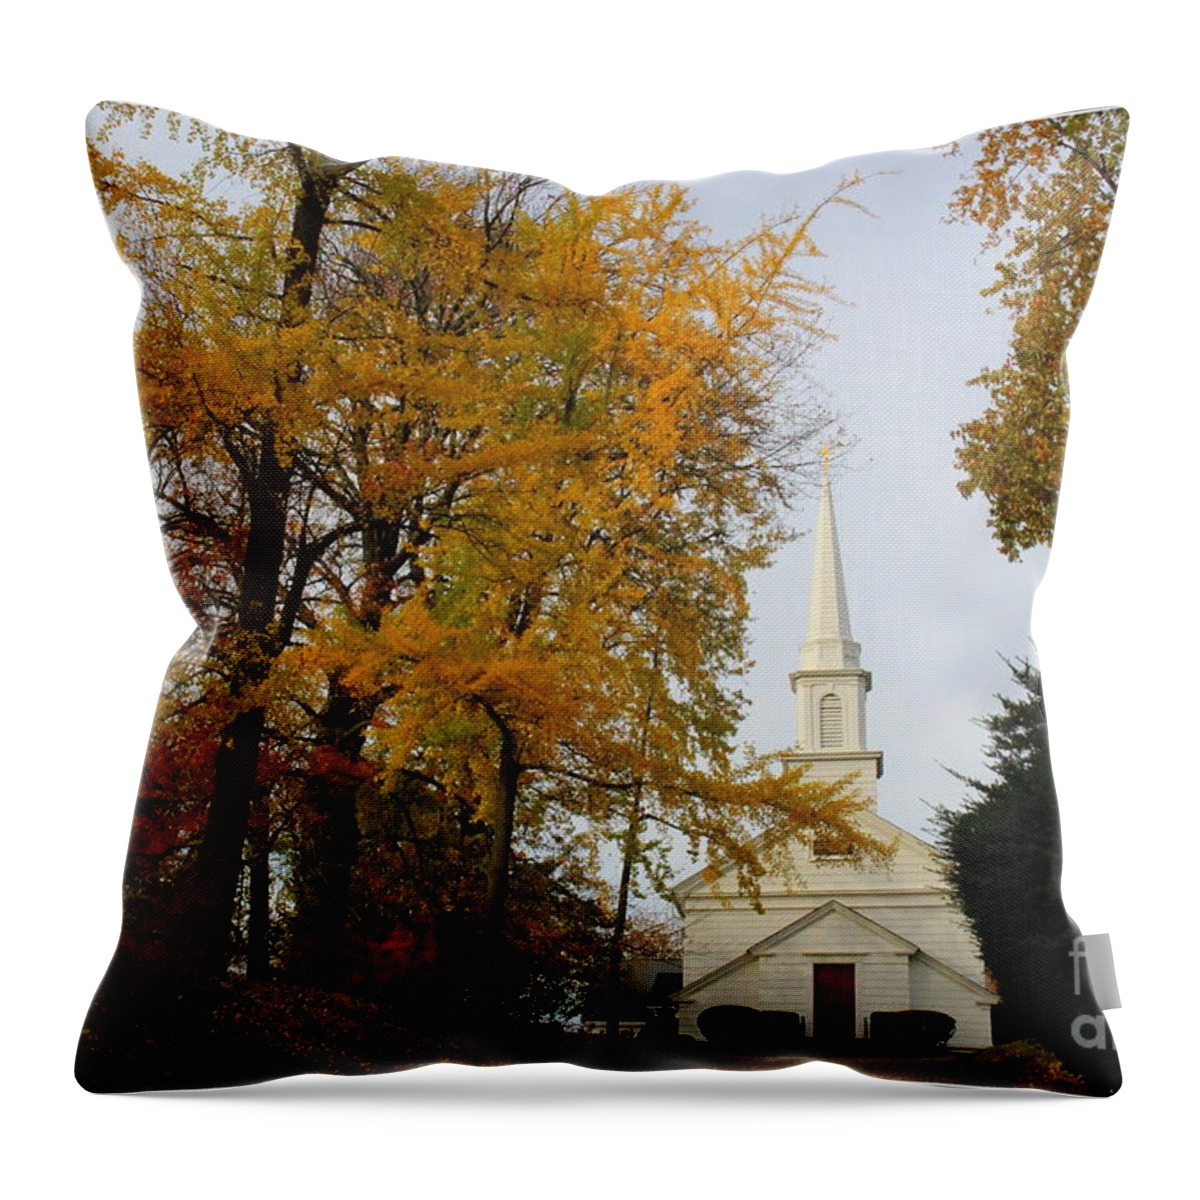  Churches Throw Pillow featuring the photograph The Little Country Church in Autumn by Dora Sofia Caputo